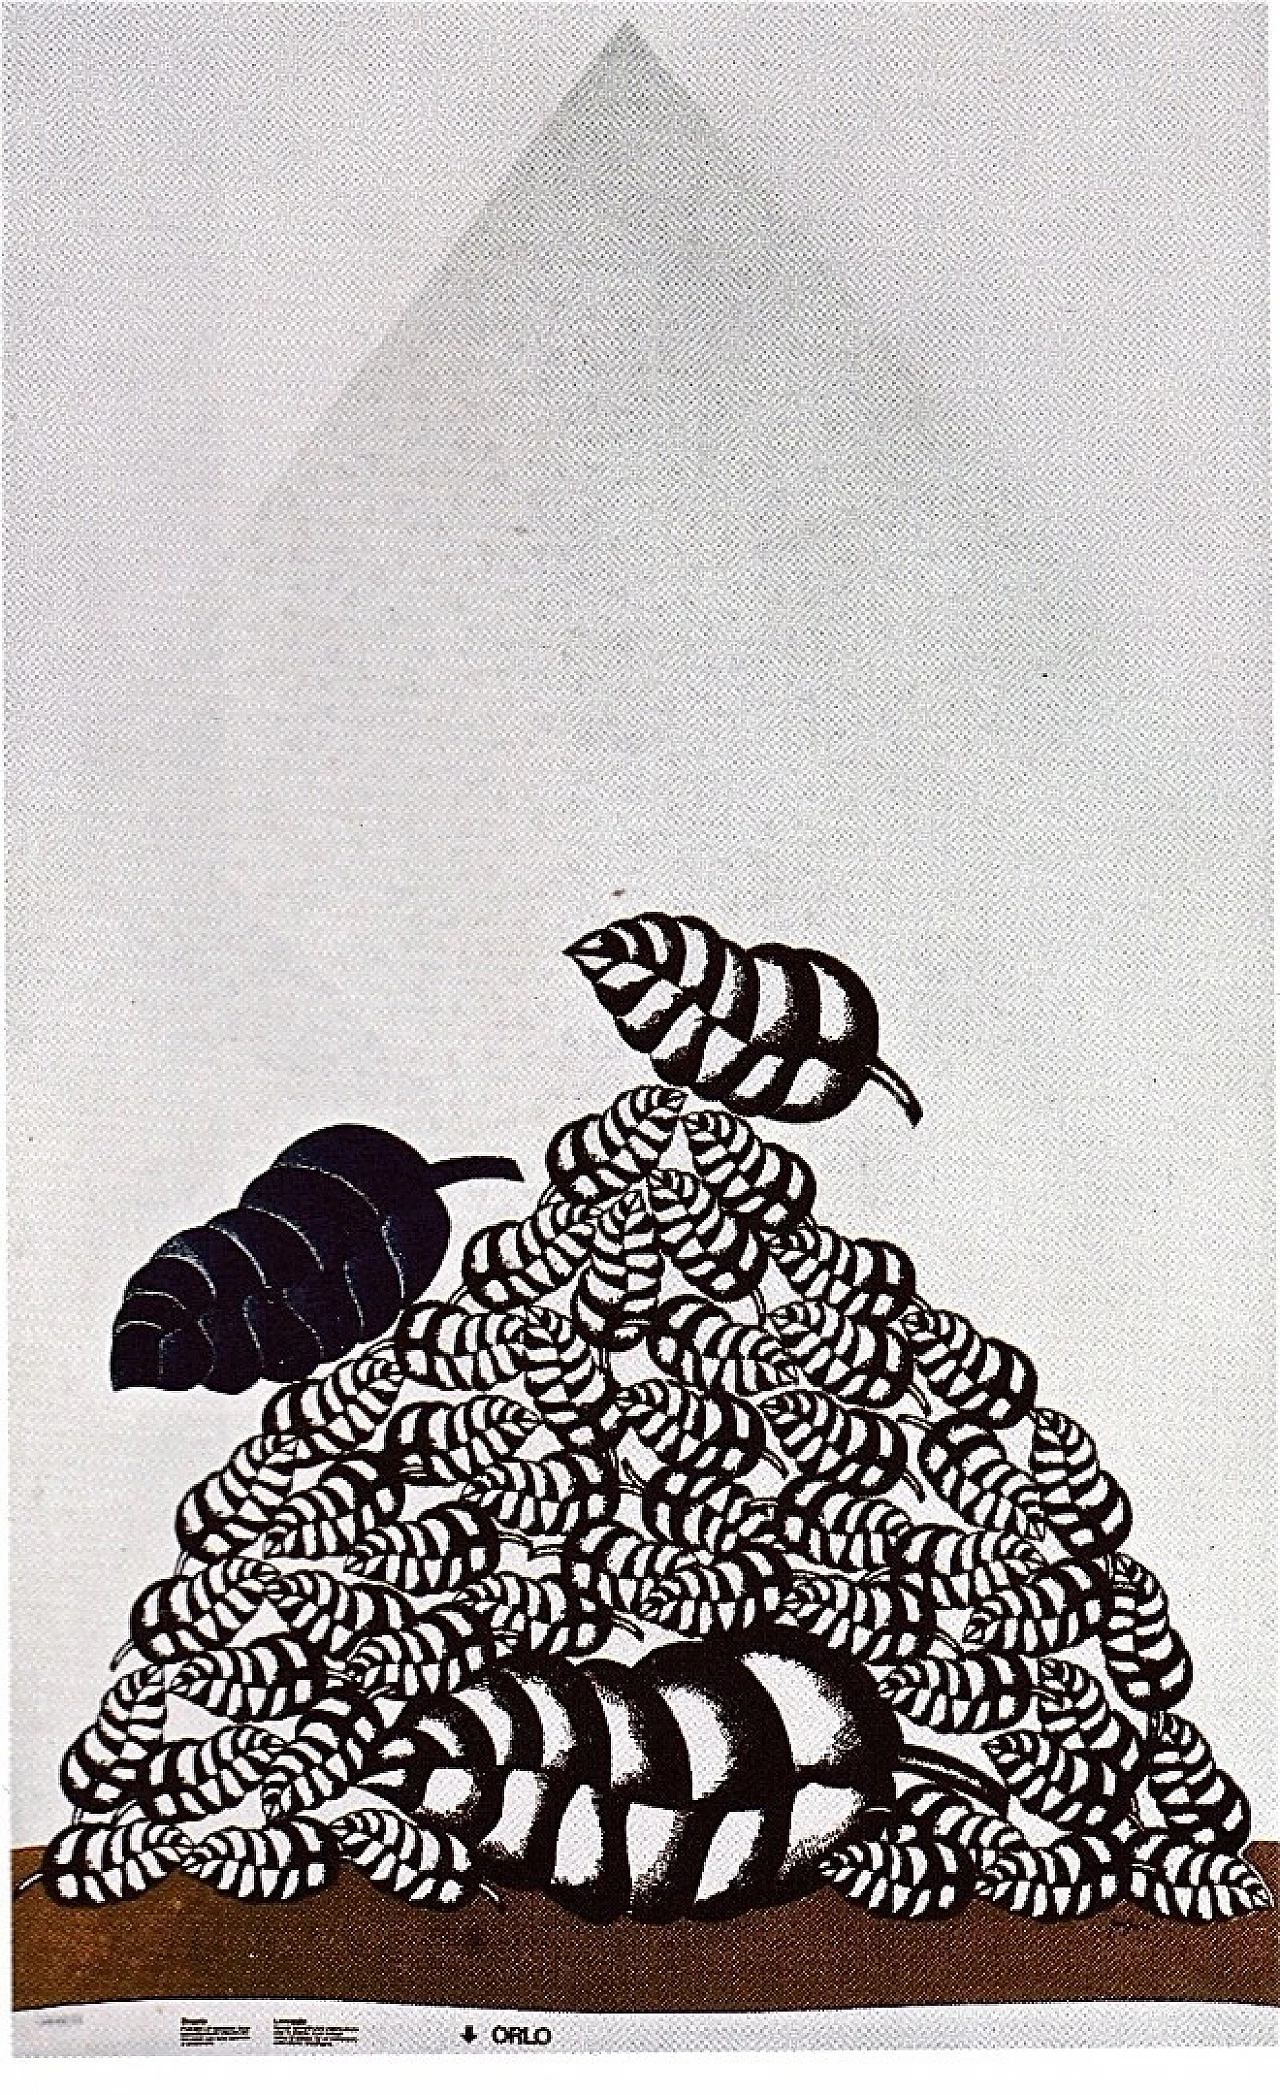 Concetto Pozzati, Fernand, print on cotton for Expansion Bologna, 1973 1480121